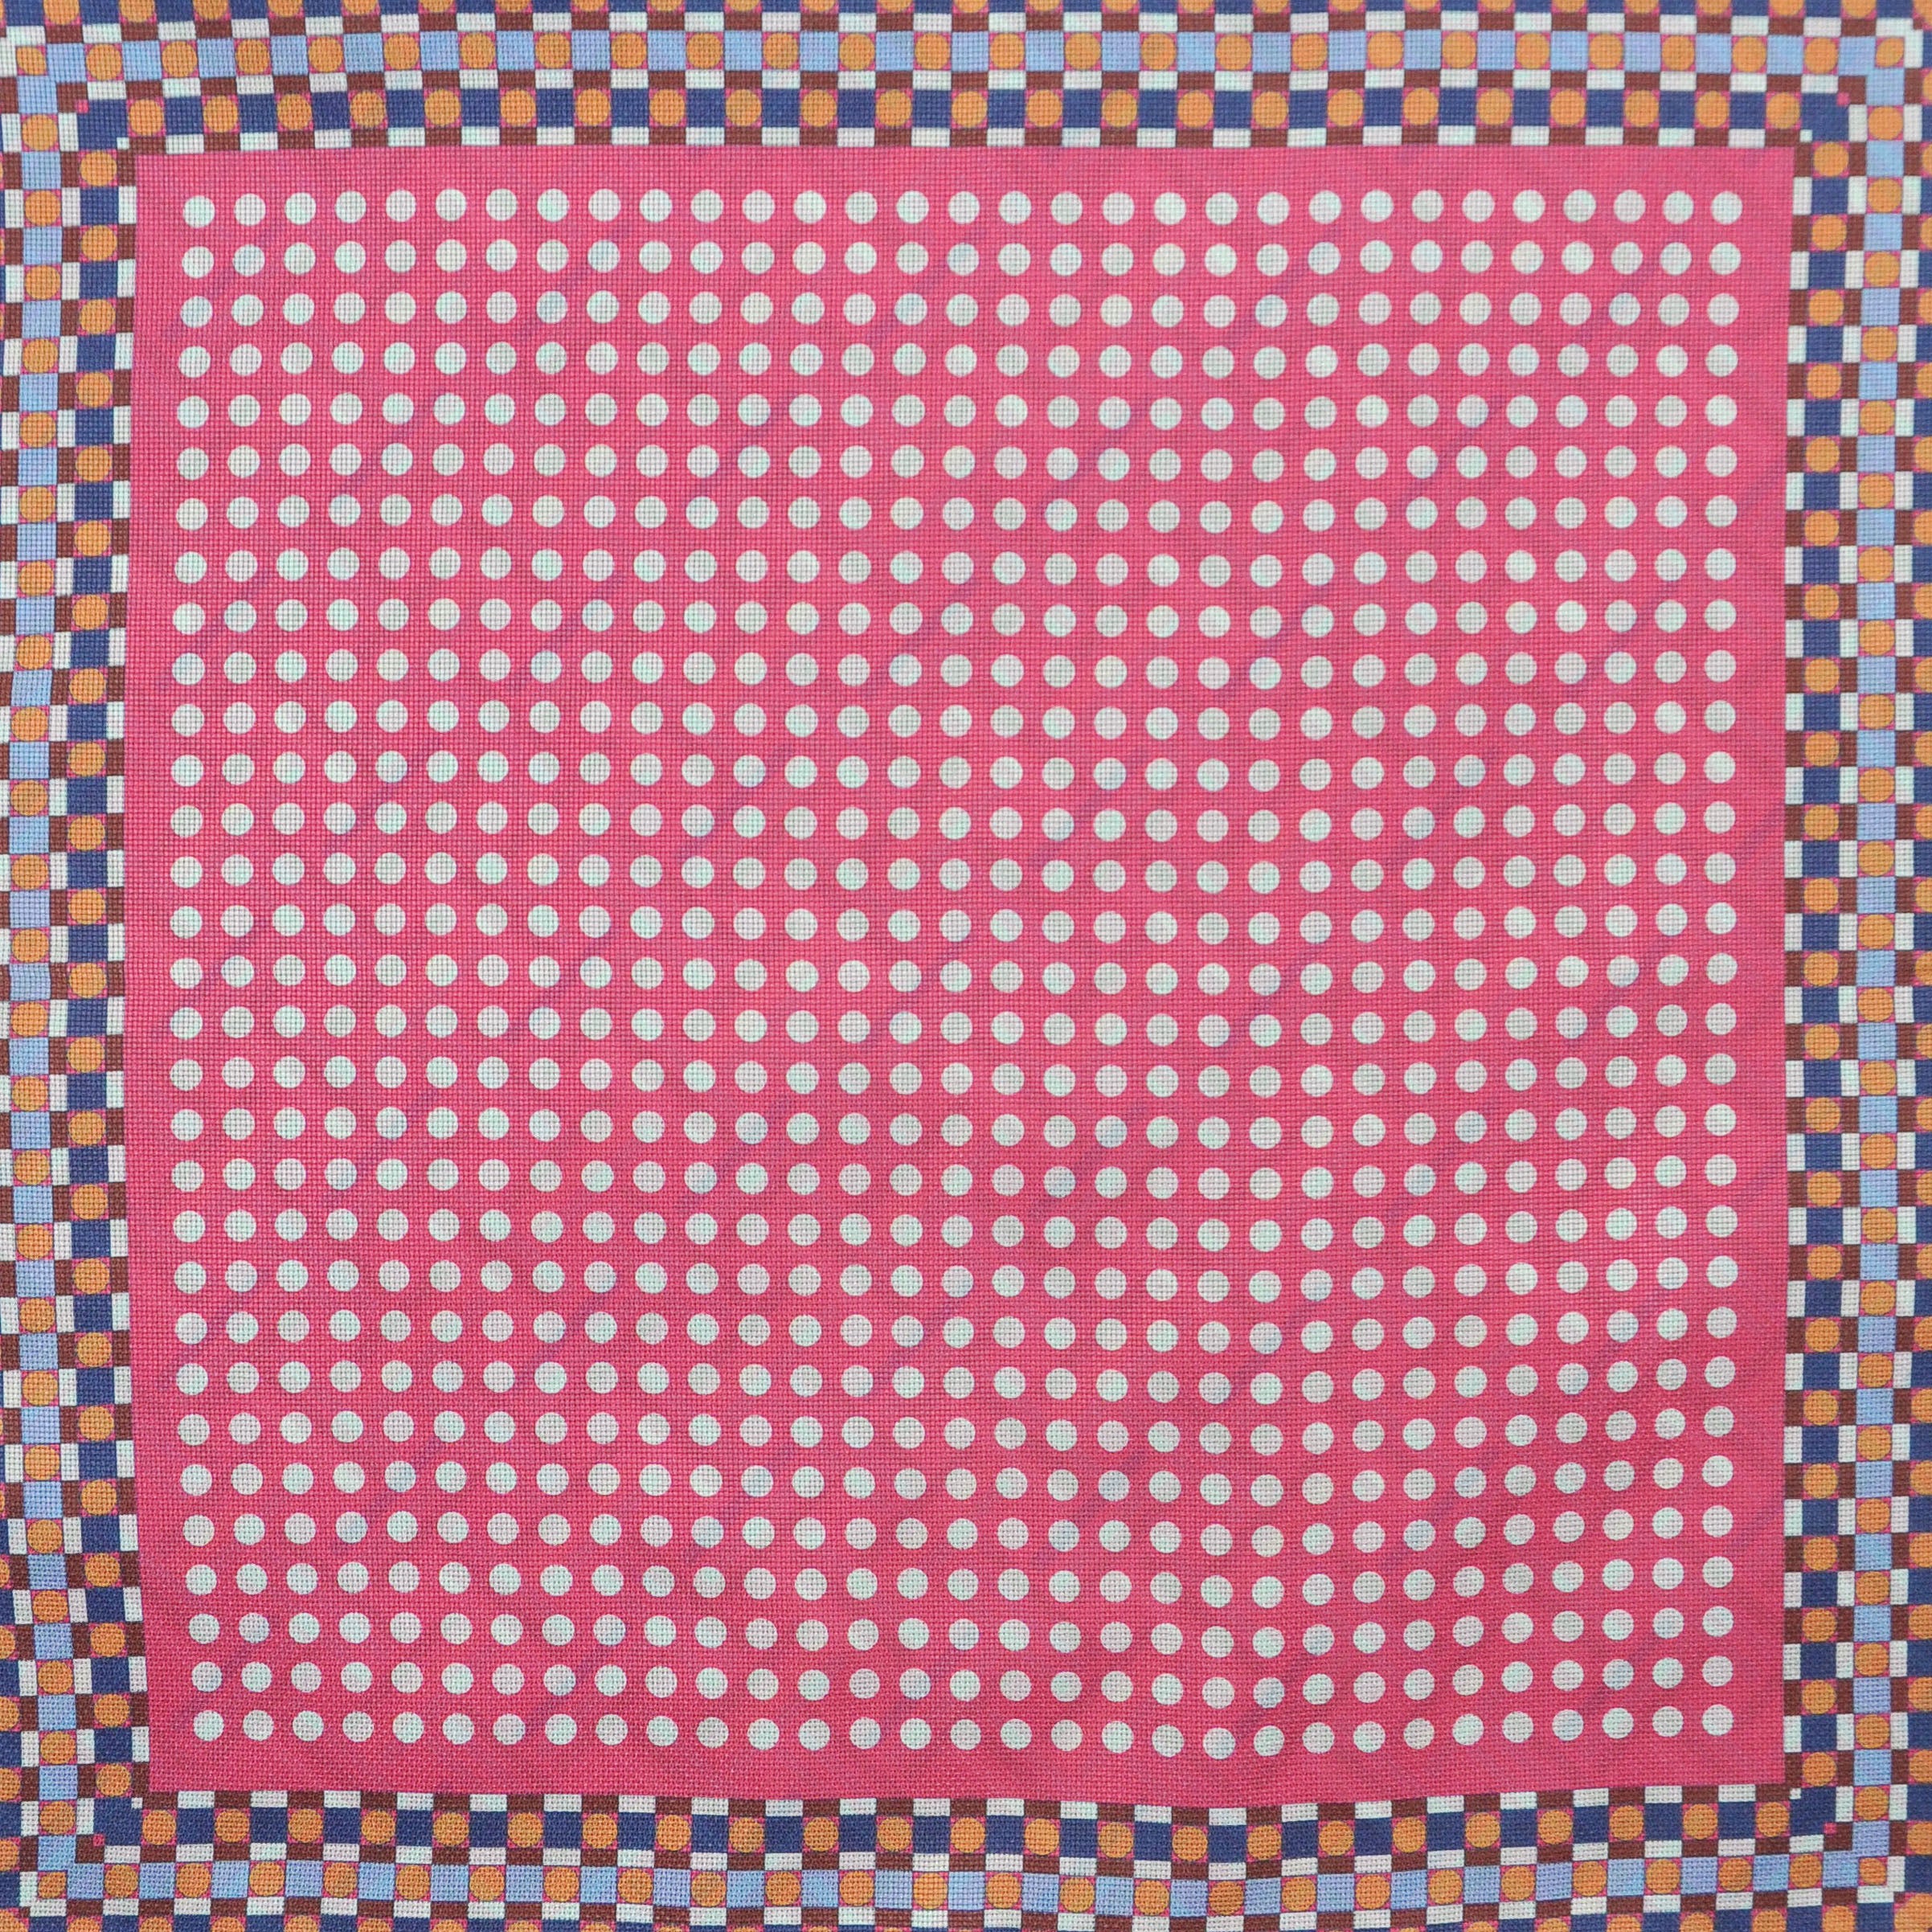 Dots & Geo's Reversible Panama Silk Pocket Square in Pink & Blue & Brown